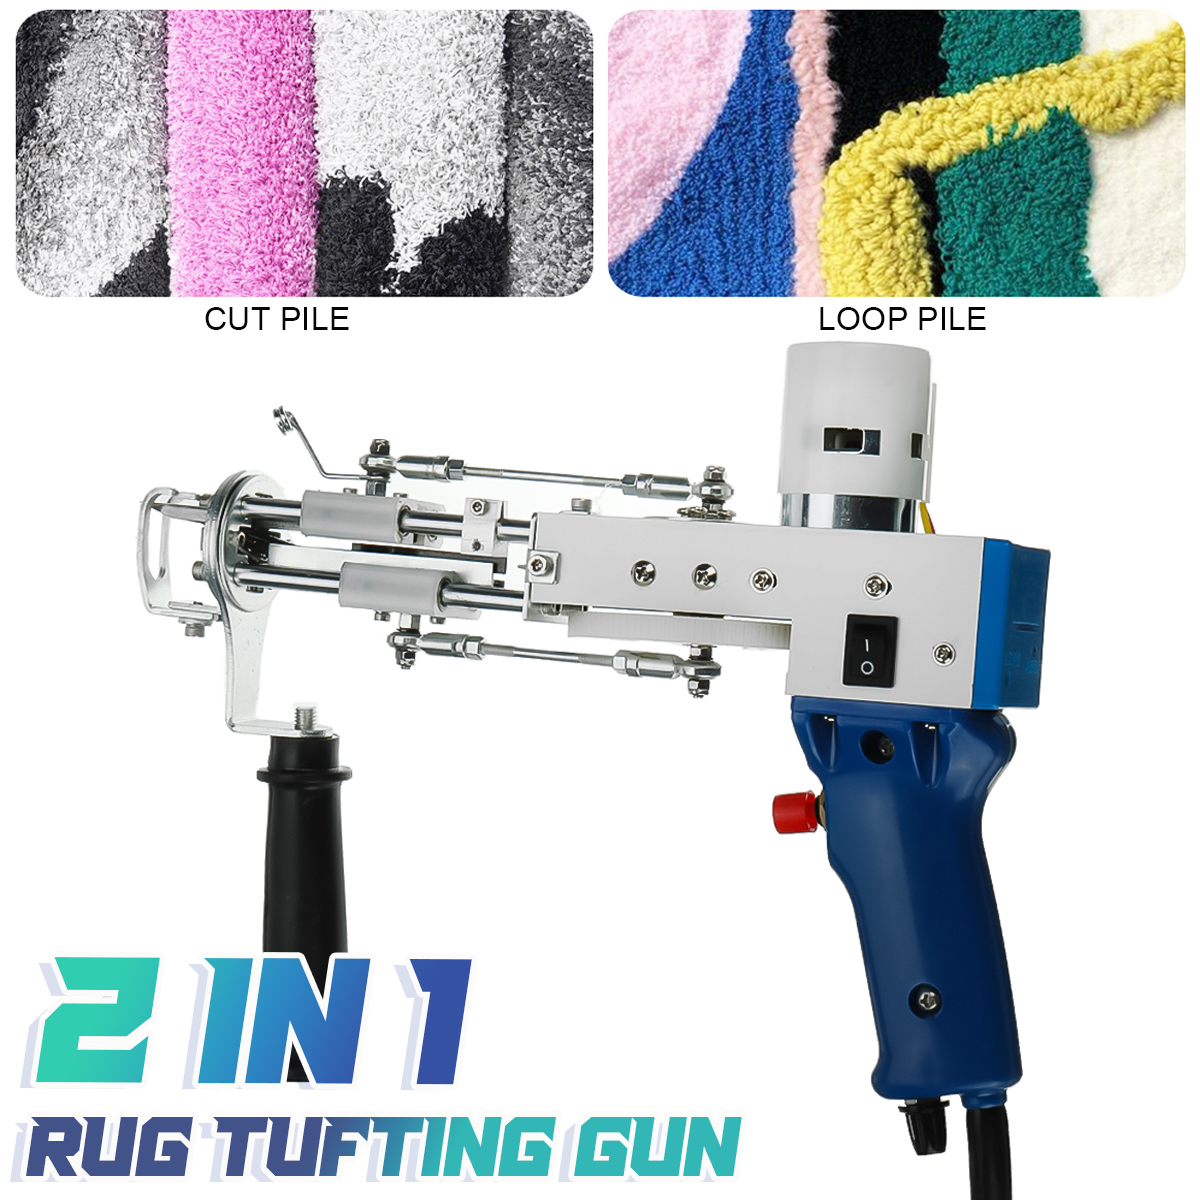 2-IN-1-Cut-Pile--Loop-Pile-Electric-Hand-Rug-Tufting-Guns-Carpet-Weaving-Flocking-Machine-1887920-3